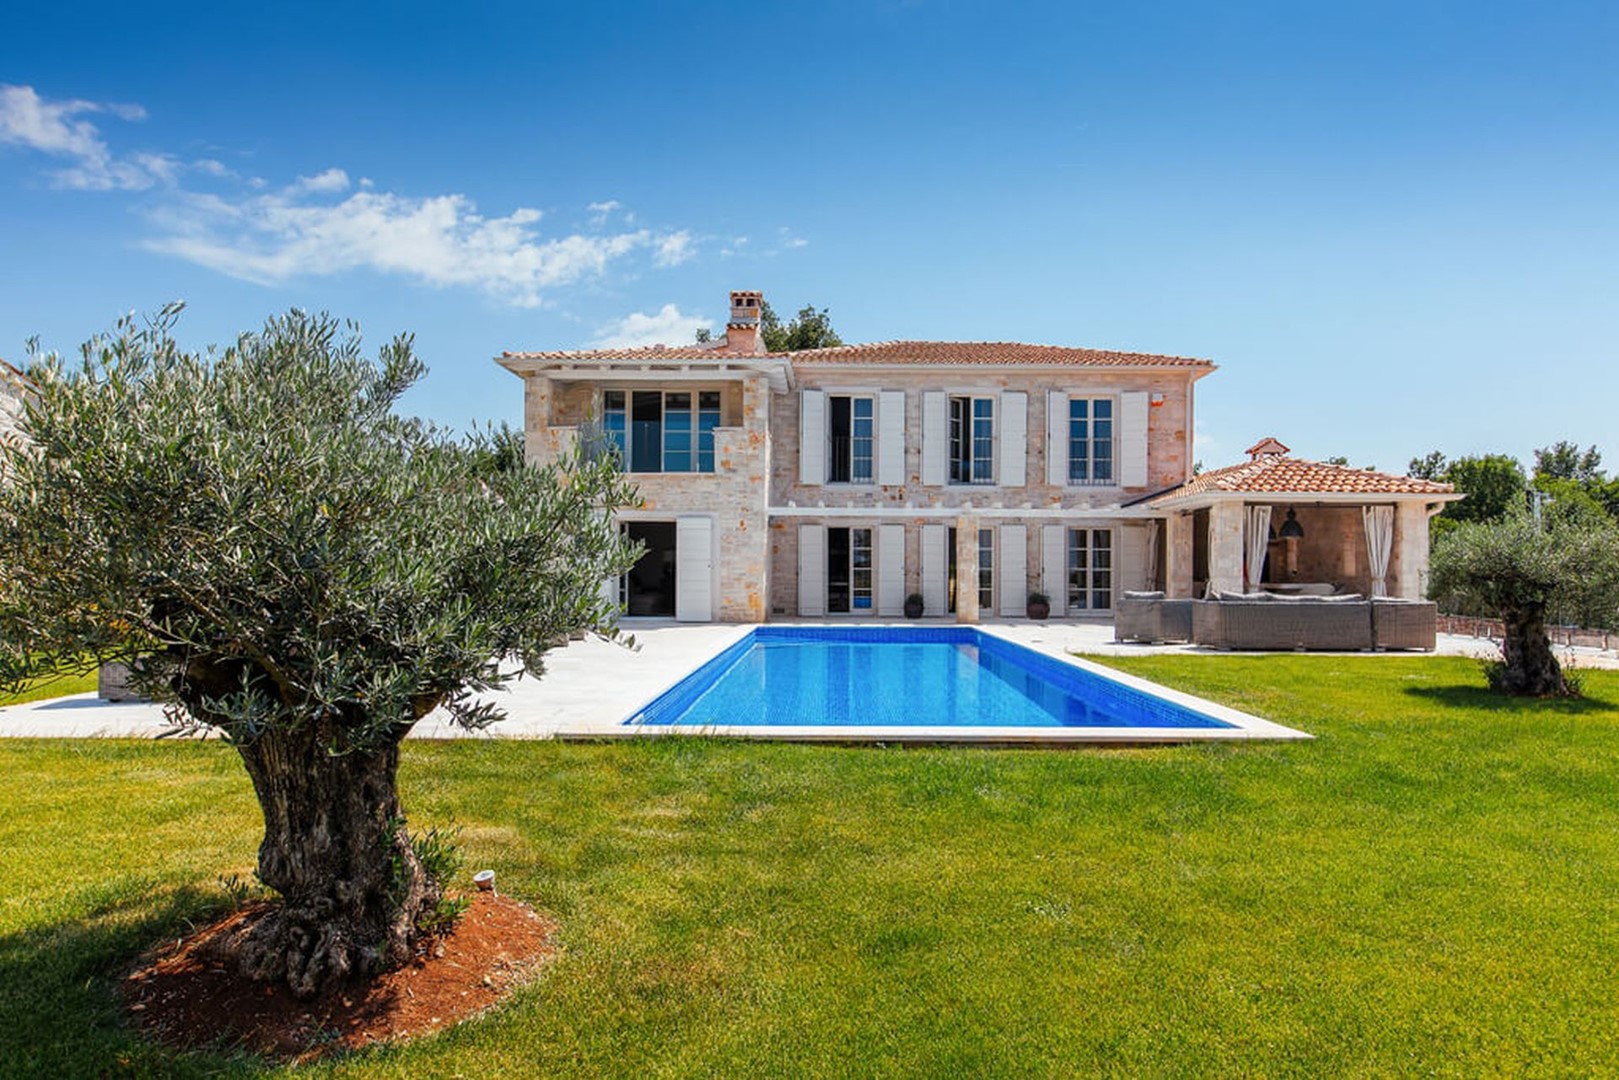 LUXURY VILLAS ISTRIA - Luxury Villa Primrose with private pool